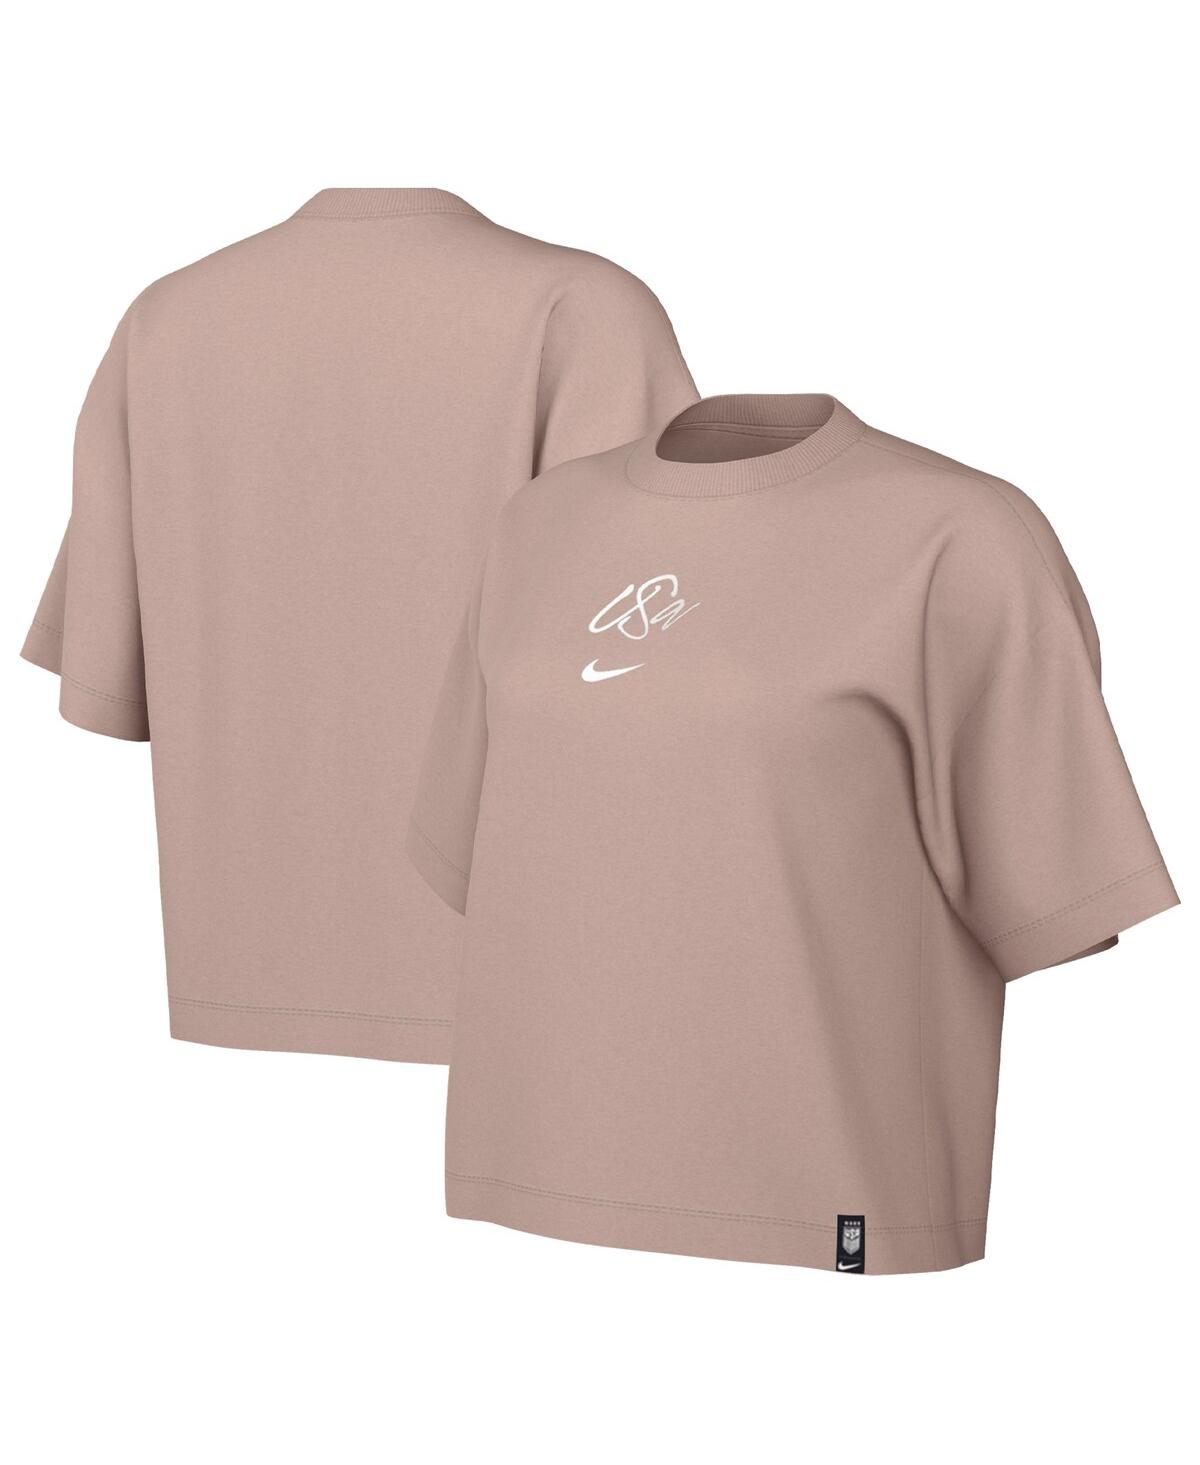 Women's Nike Tan Uswnt Fearless T-shirt - Tan